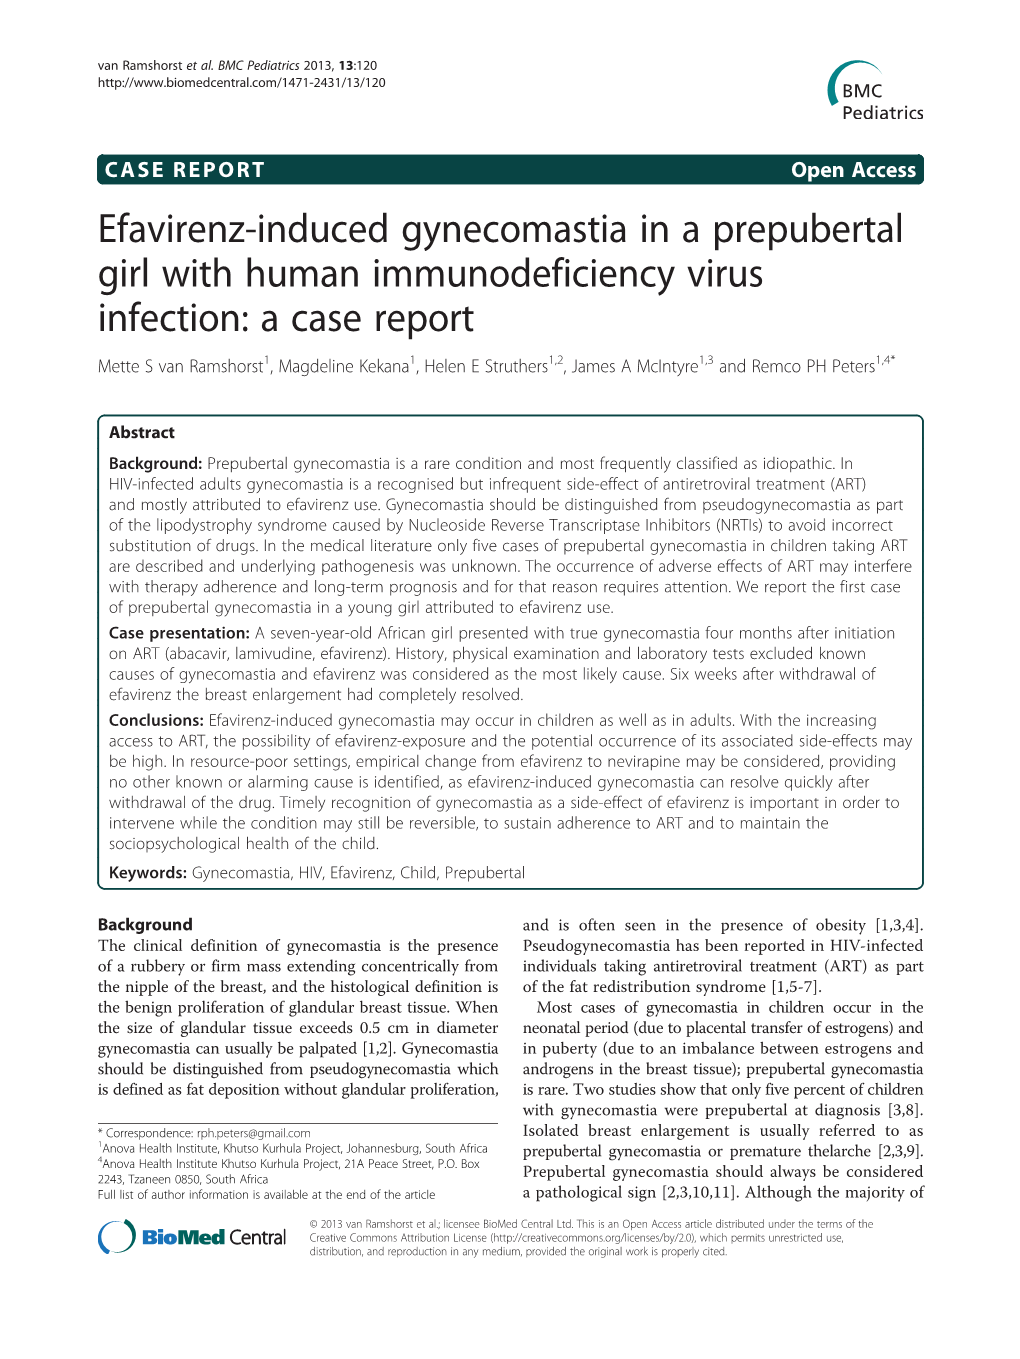 Efavirenz-Induced Gynecomastia in a Prepubertal Girl With